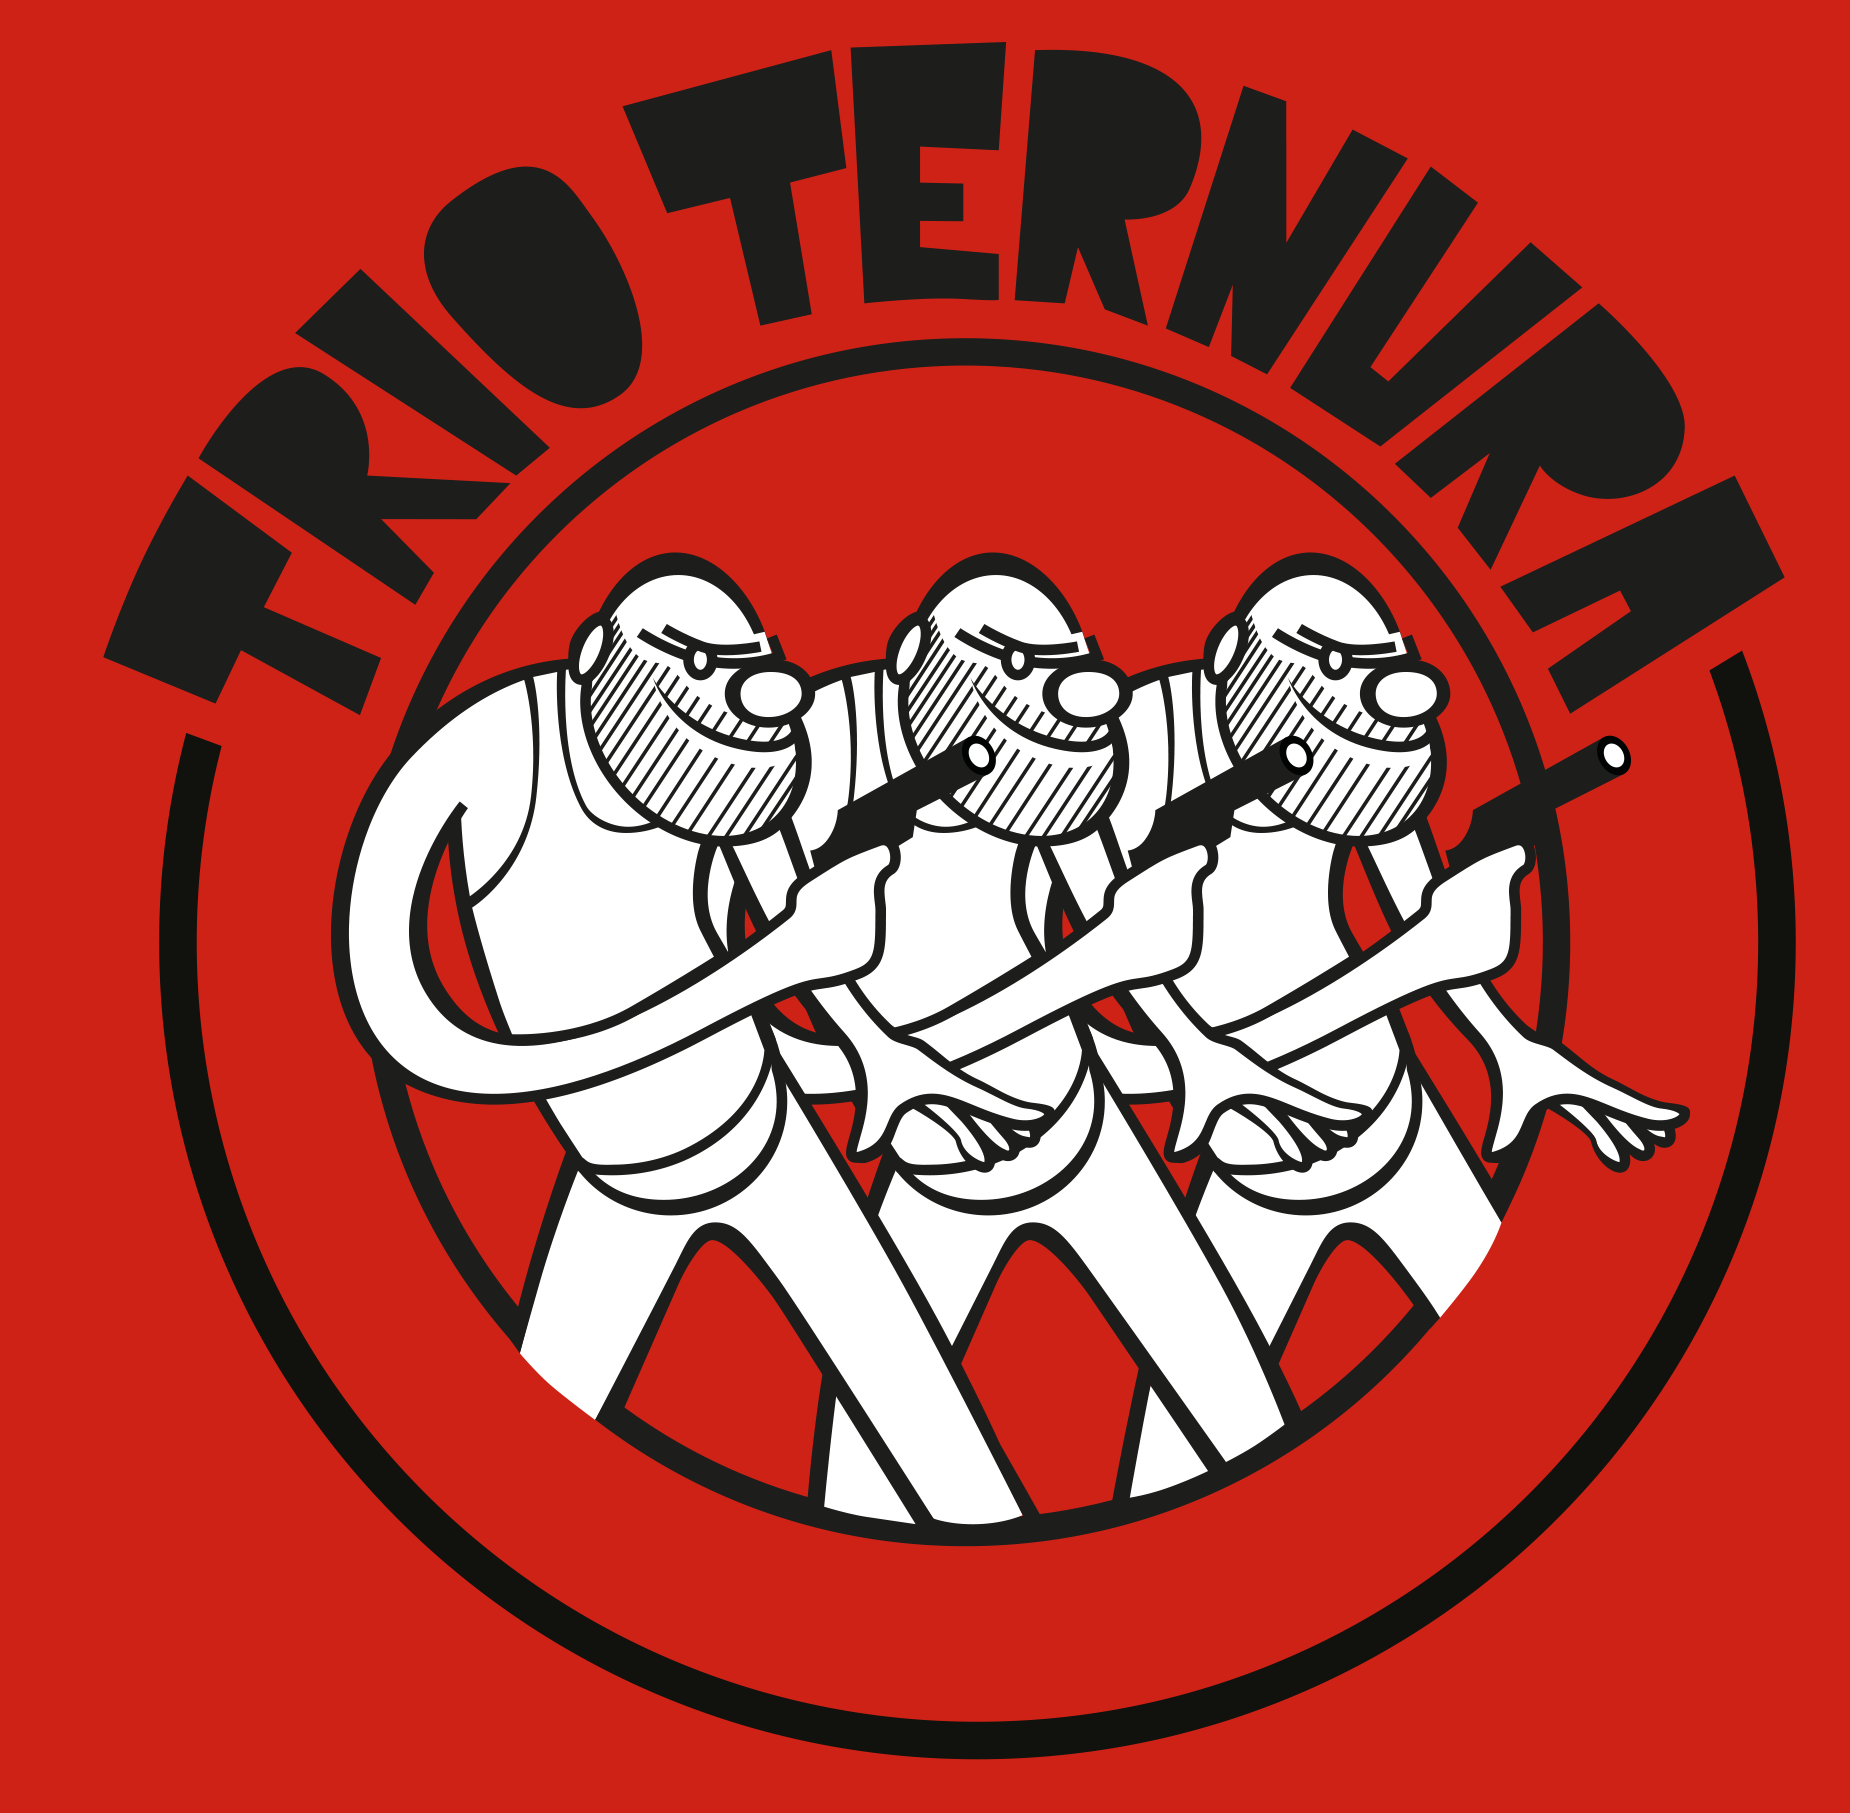 Trio Ternura